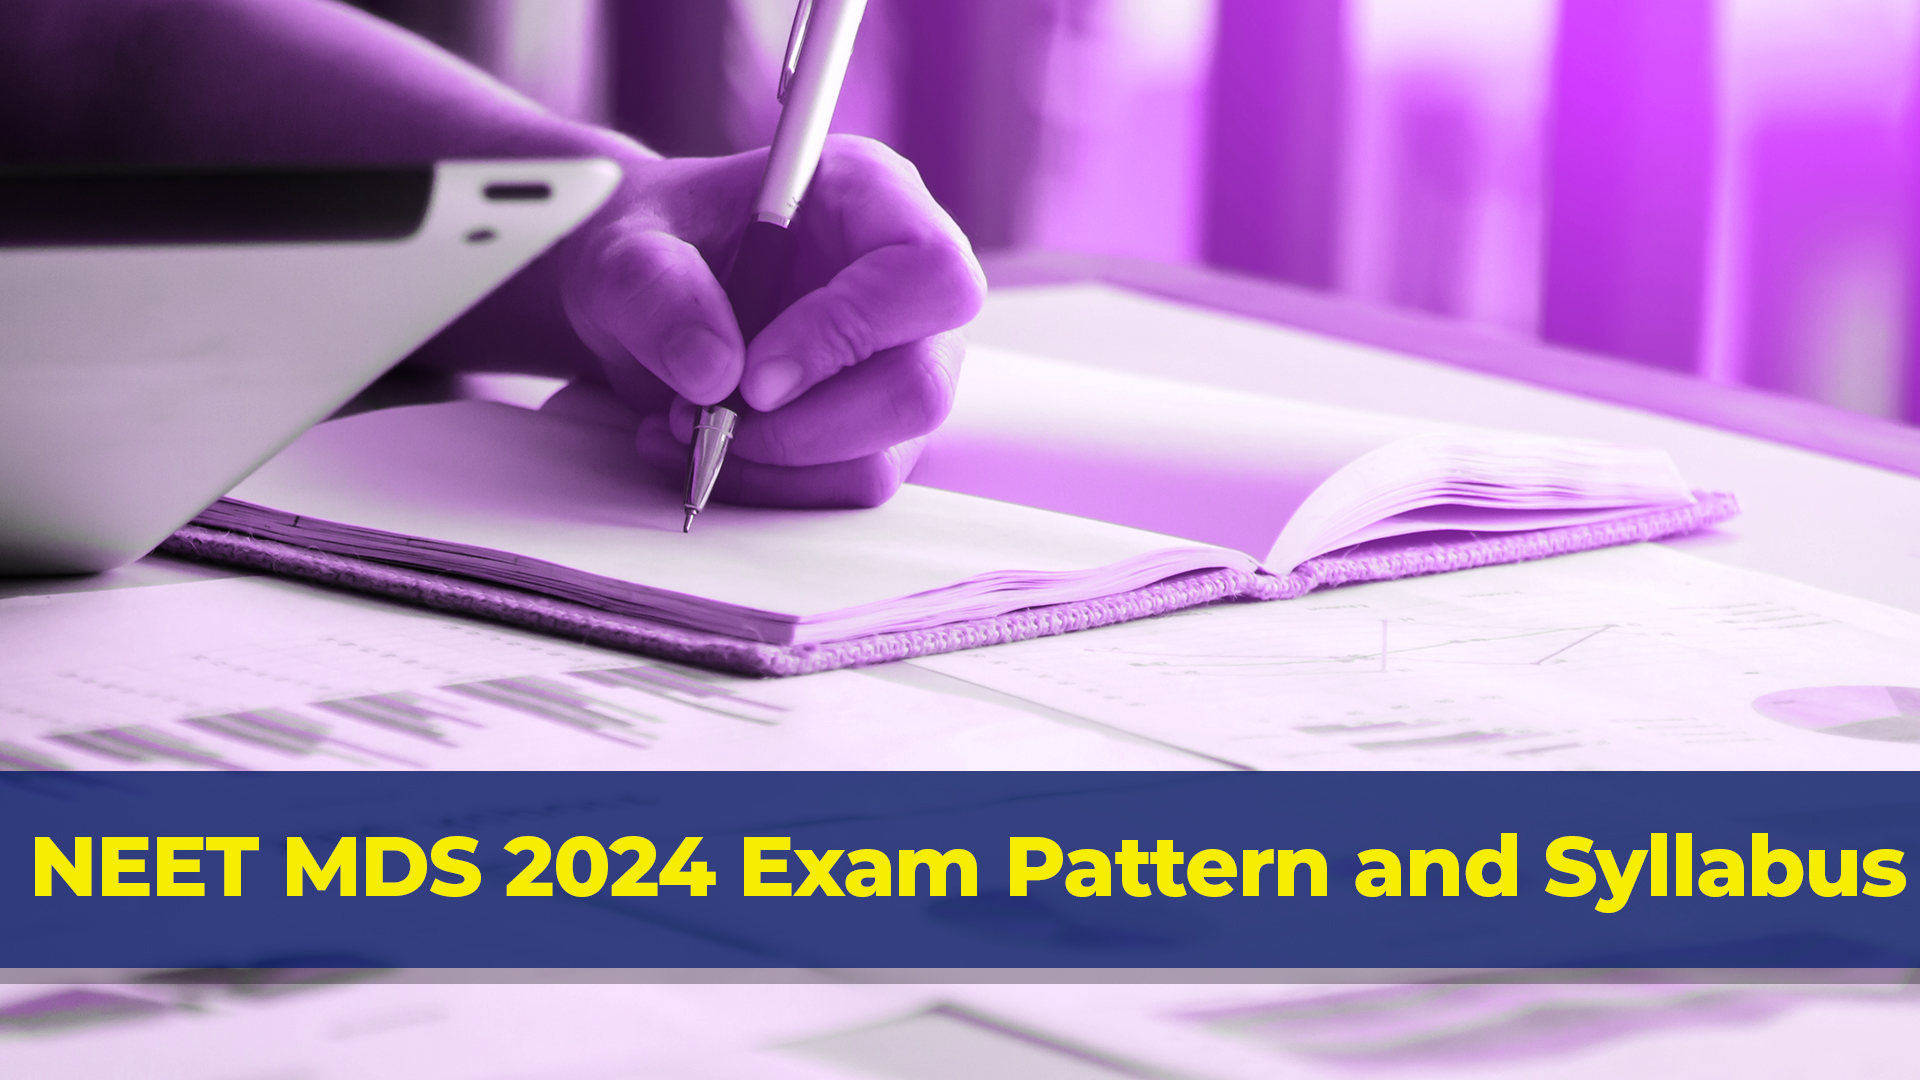 NEET MDS 2024 Exam Pattern, Syllabus and marking scheme